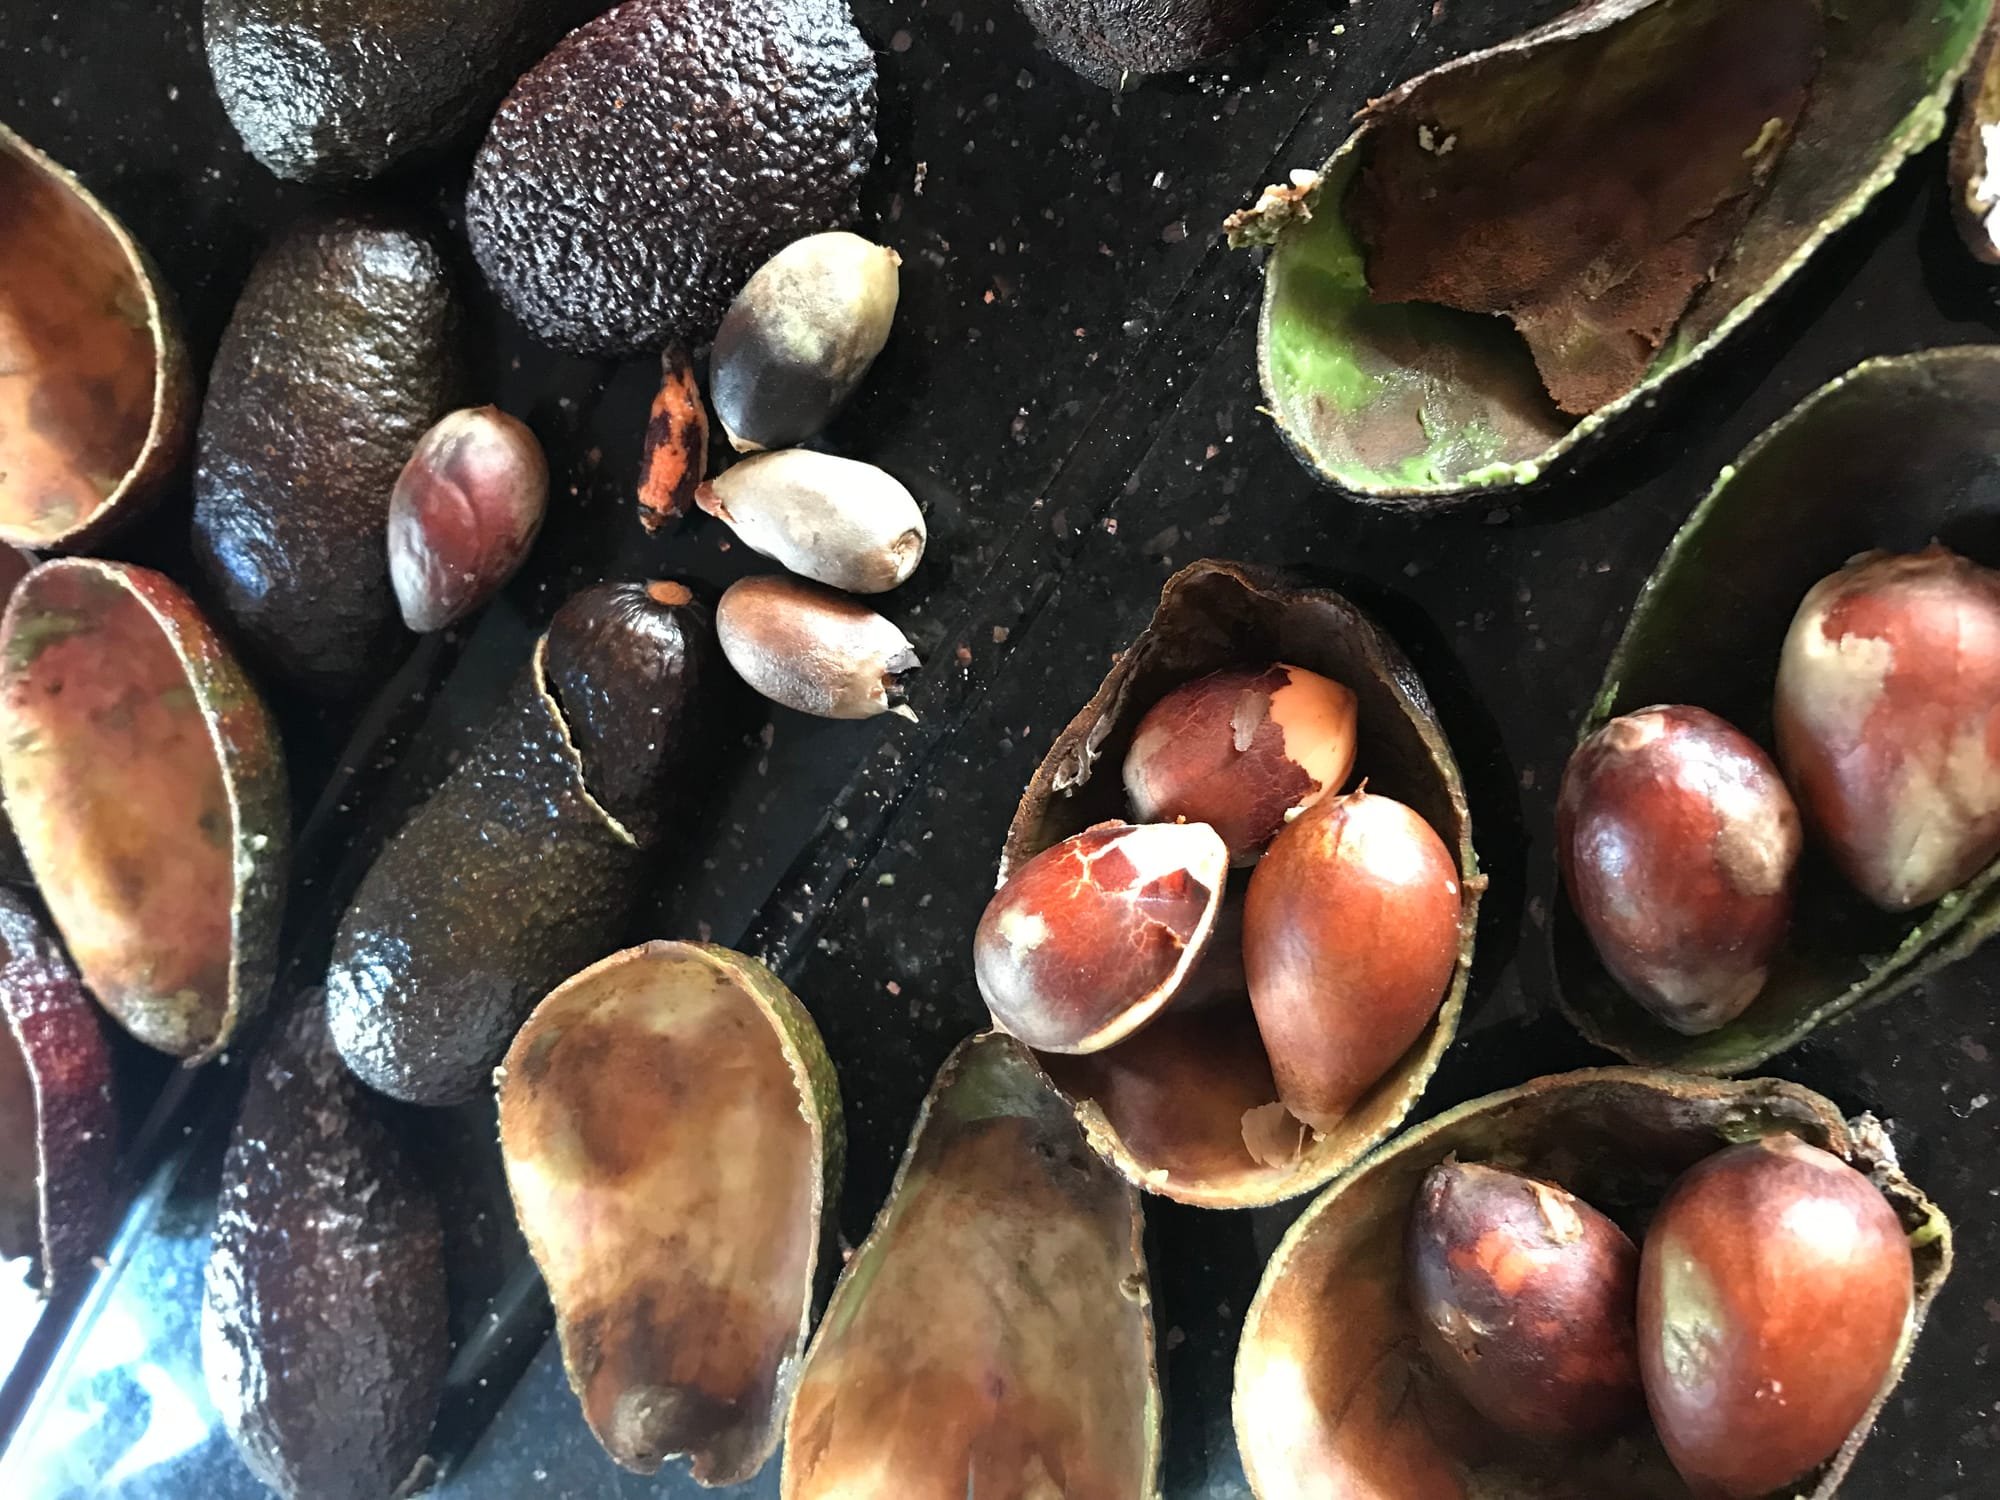 Avocado Stones and skins